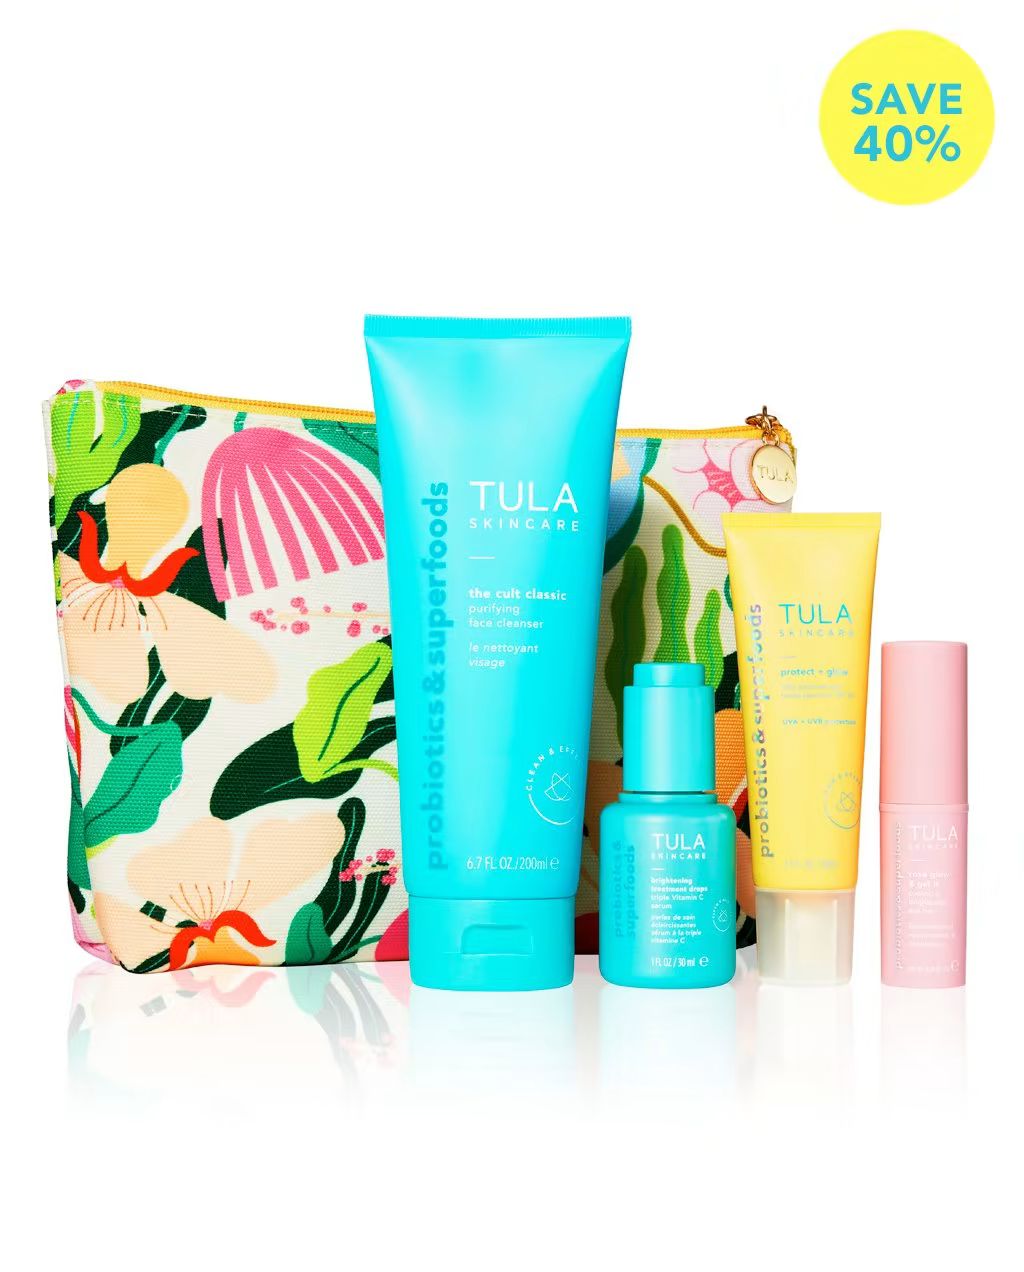 radiance routine kit | Tula Skincare